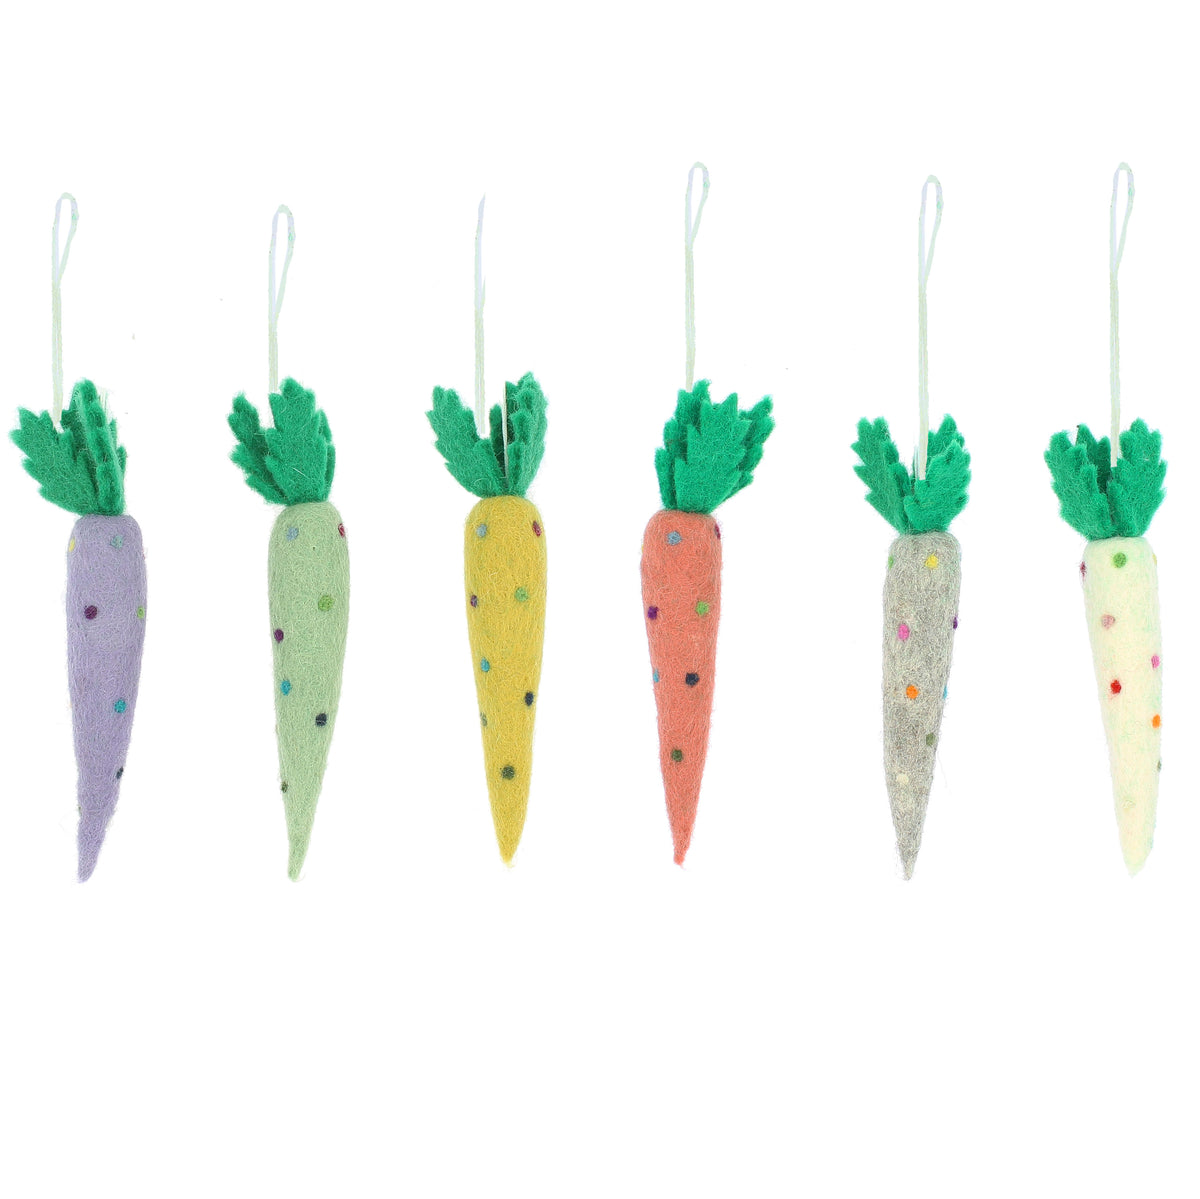 'Spotty Carrot' felt decorations by Fiona Walker England